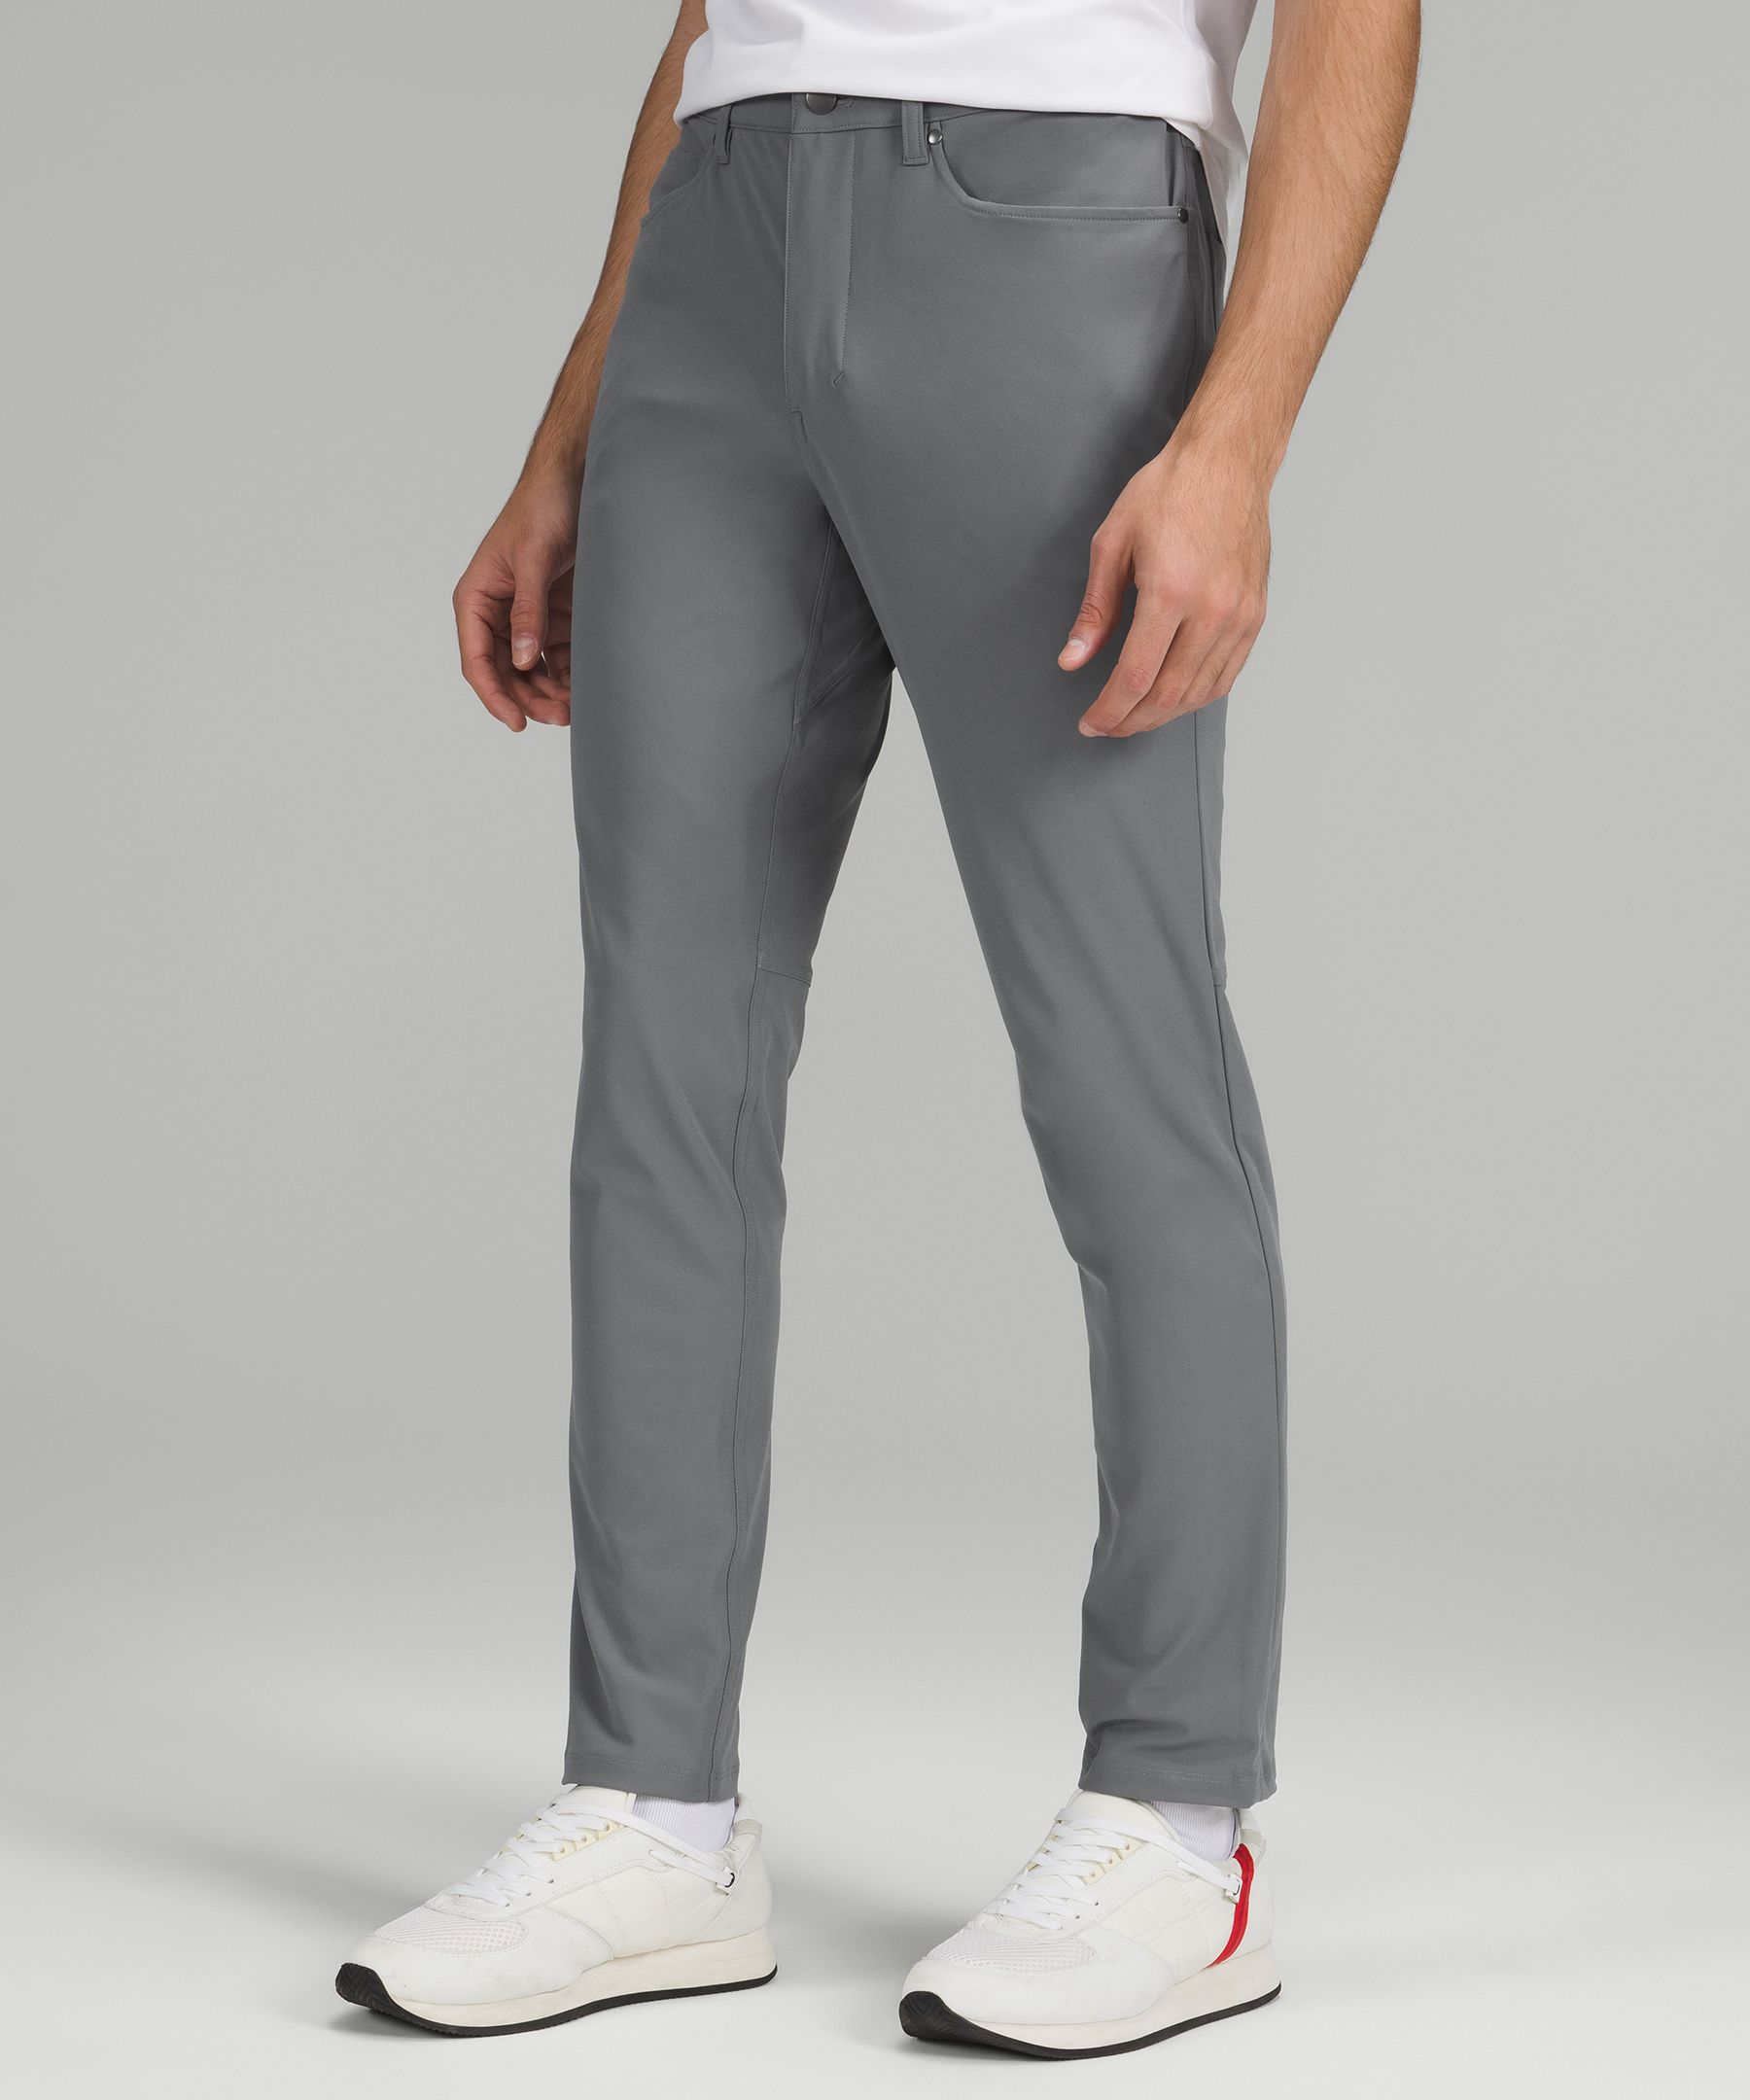 Men's Khaki Pants | lululemon